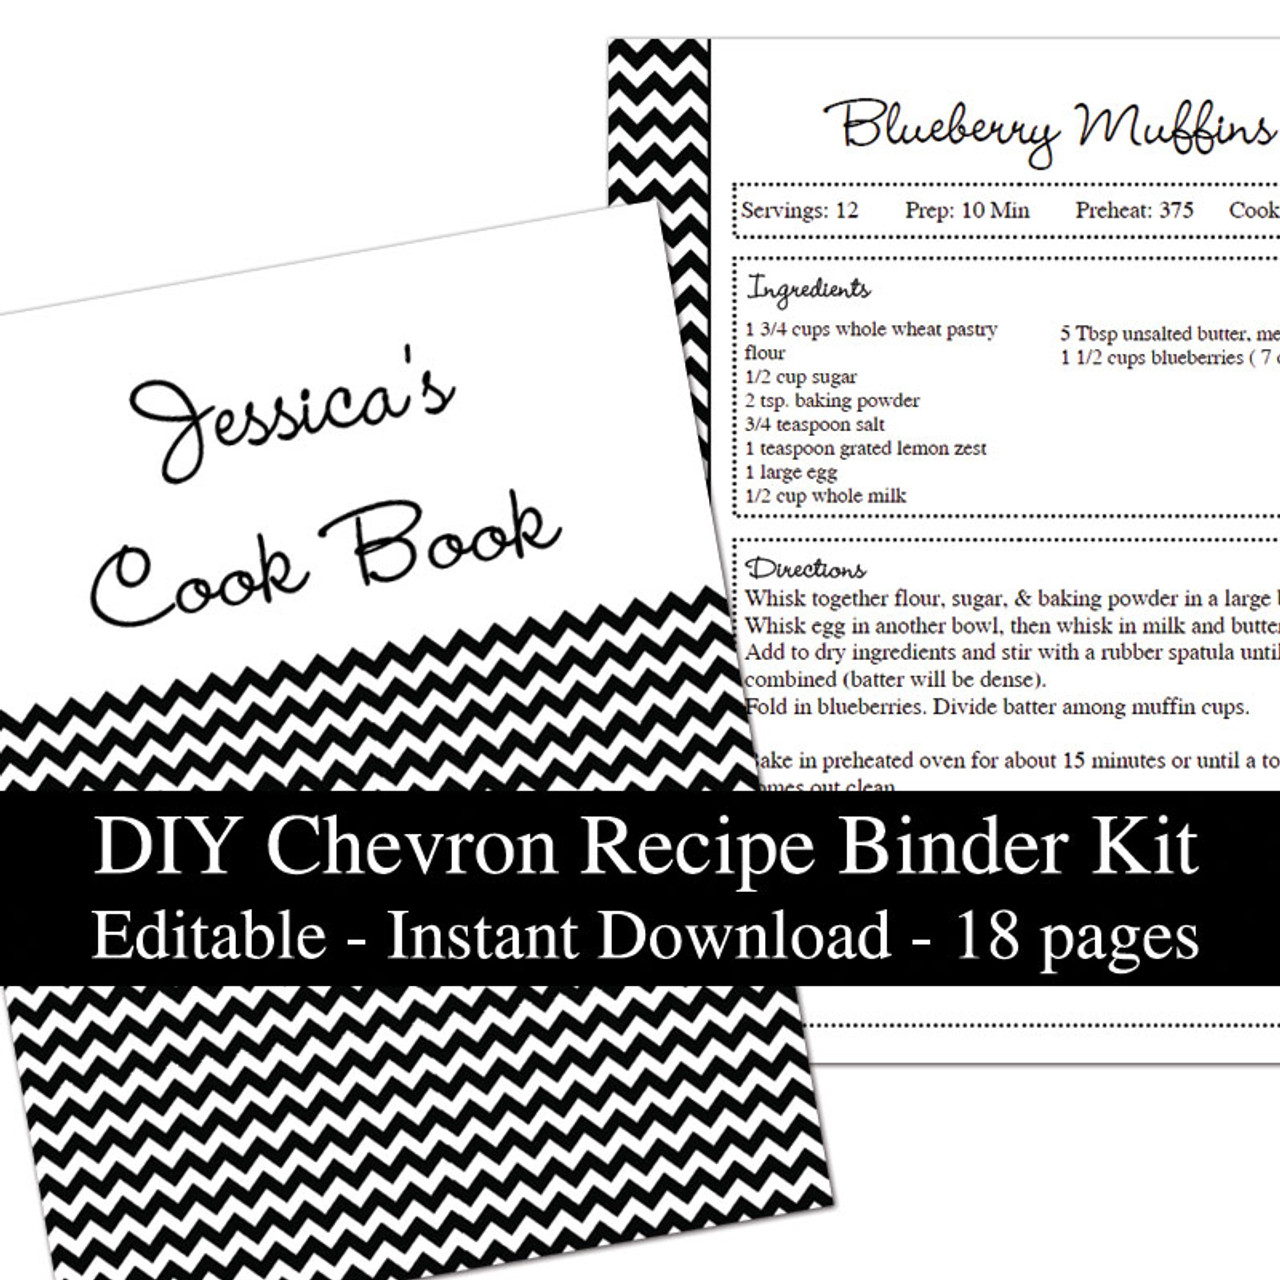 Free printable black and white digital paper pack - Chevron Lemon